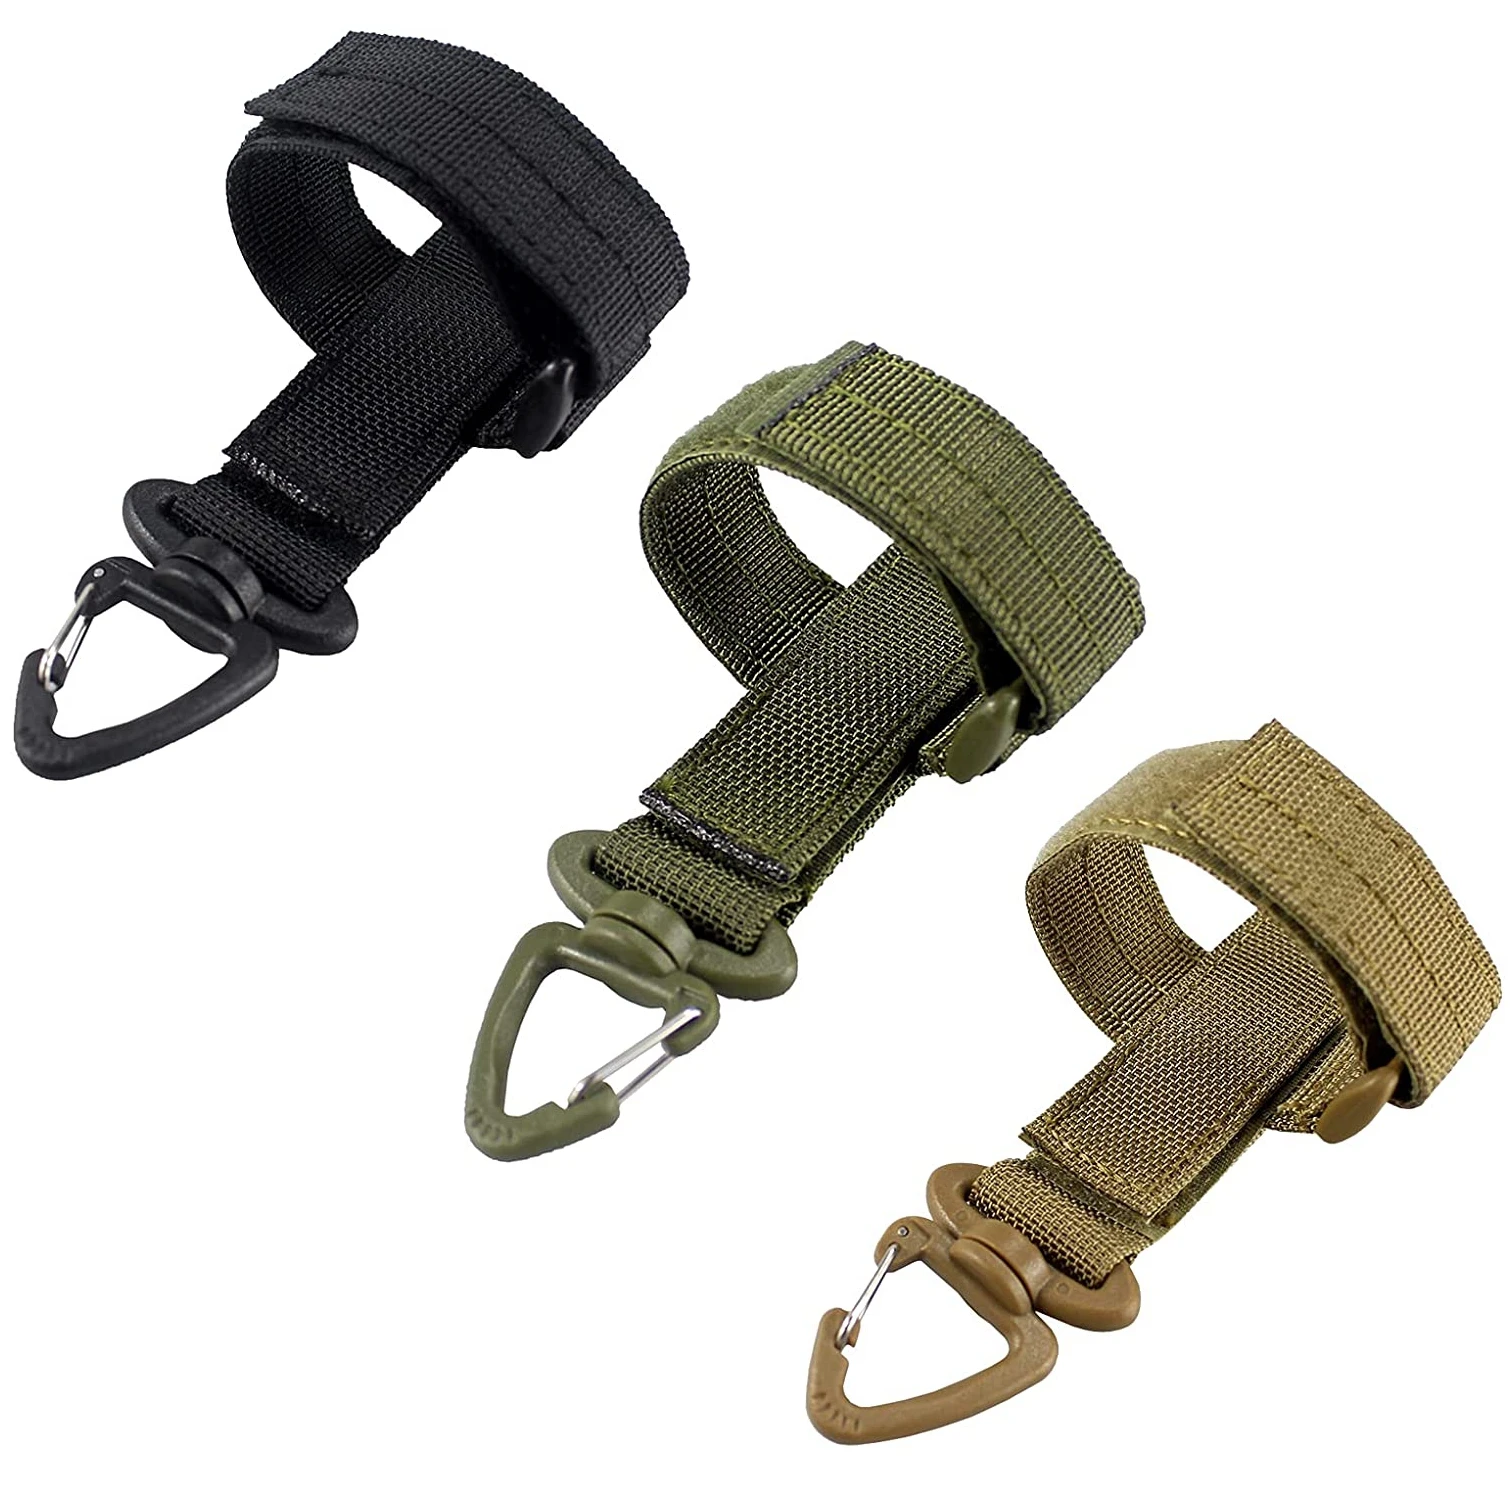 Details about   Tactical Belt Keychain Nylon Outdoor Hook Quick Release ujui VnFRd 